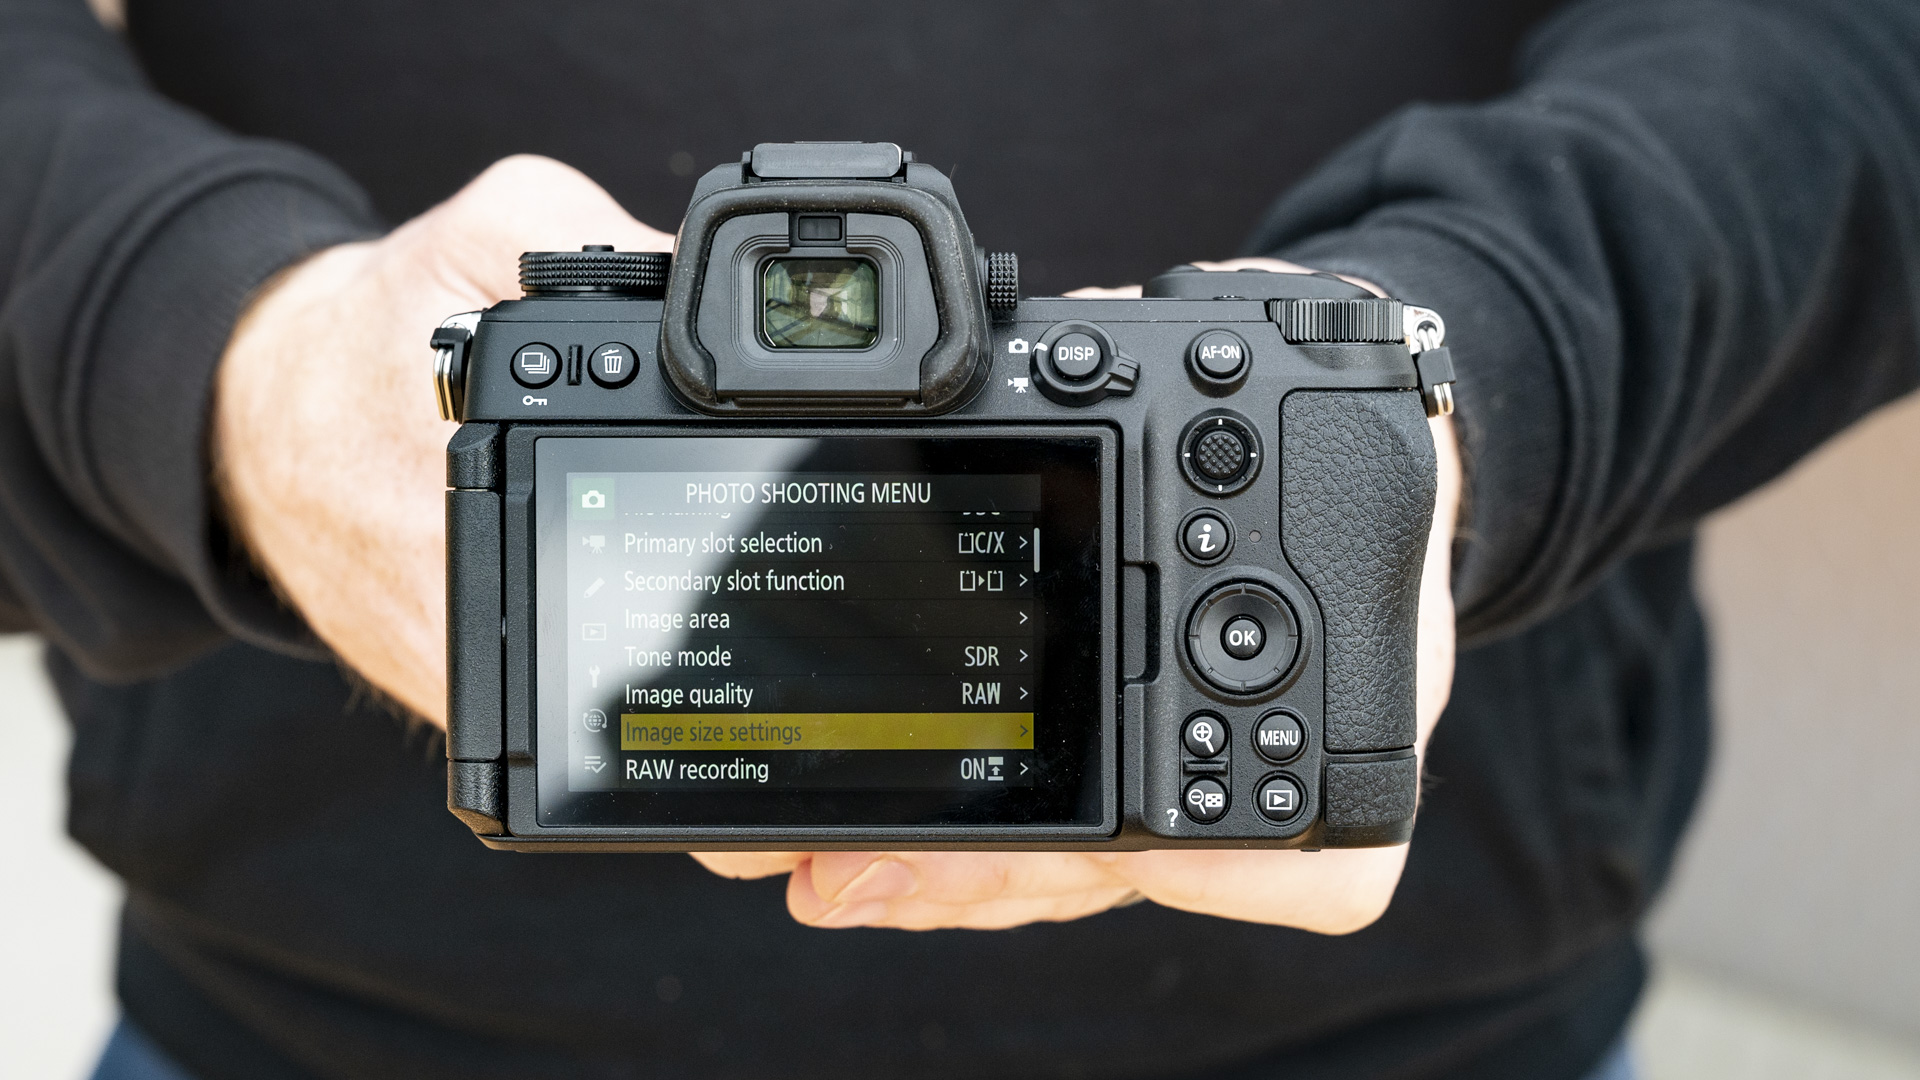 Nikon Z6 III camera in the hand, rear touchscreen